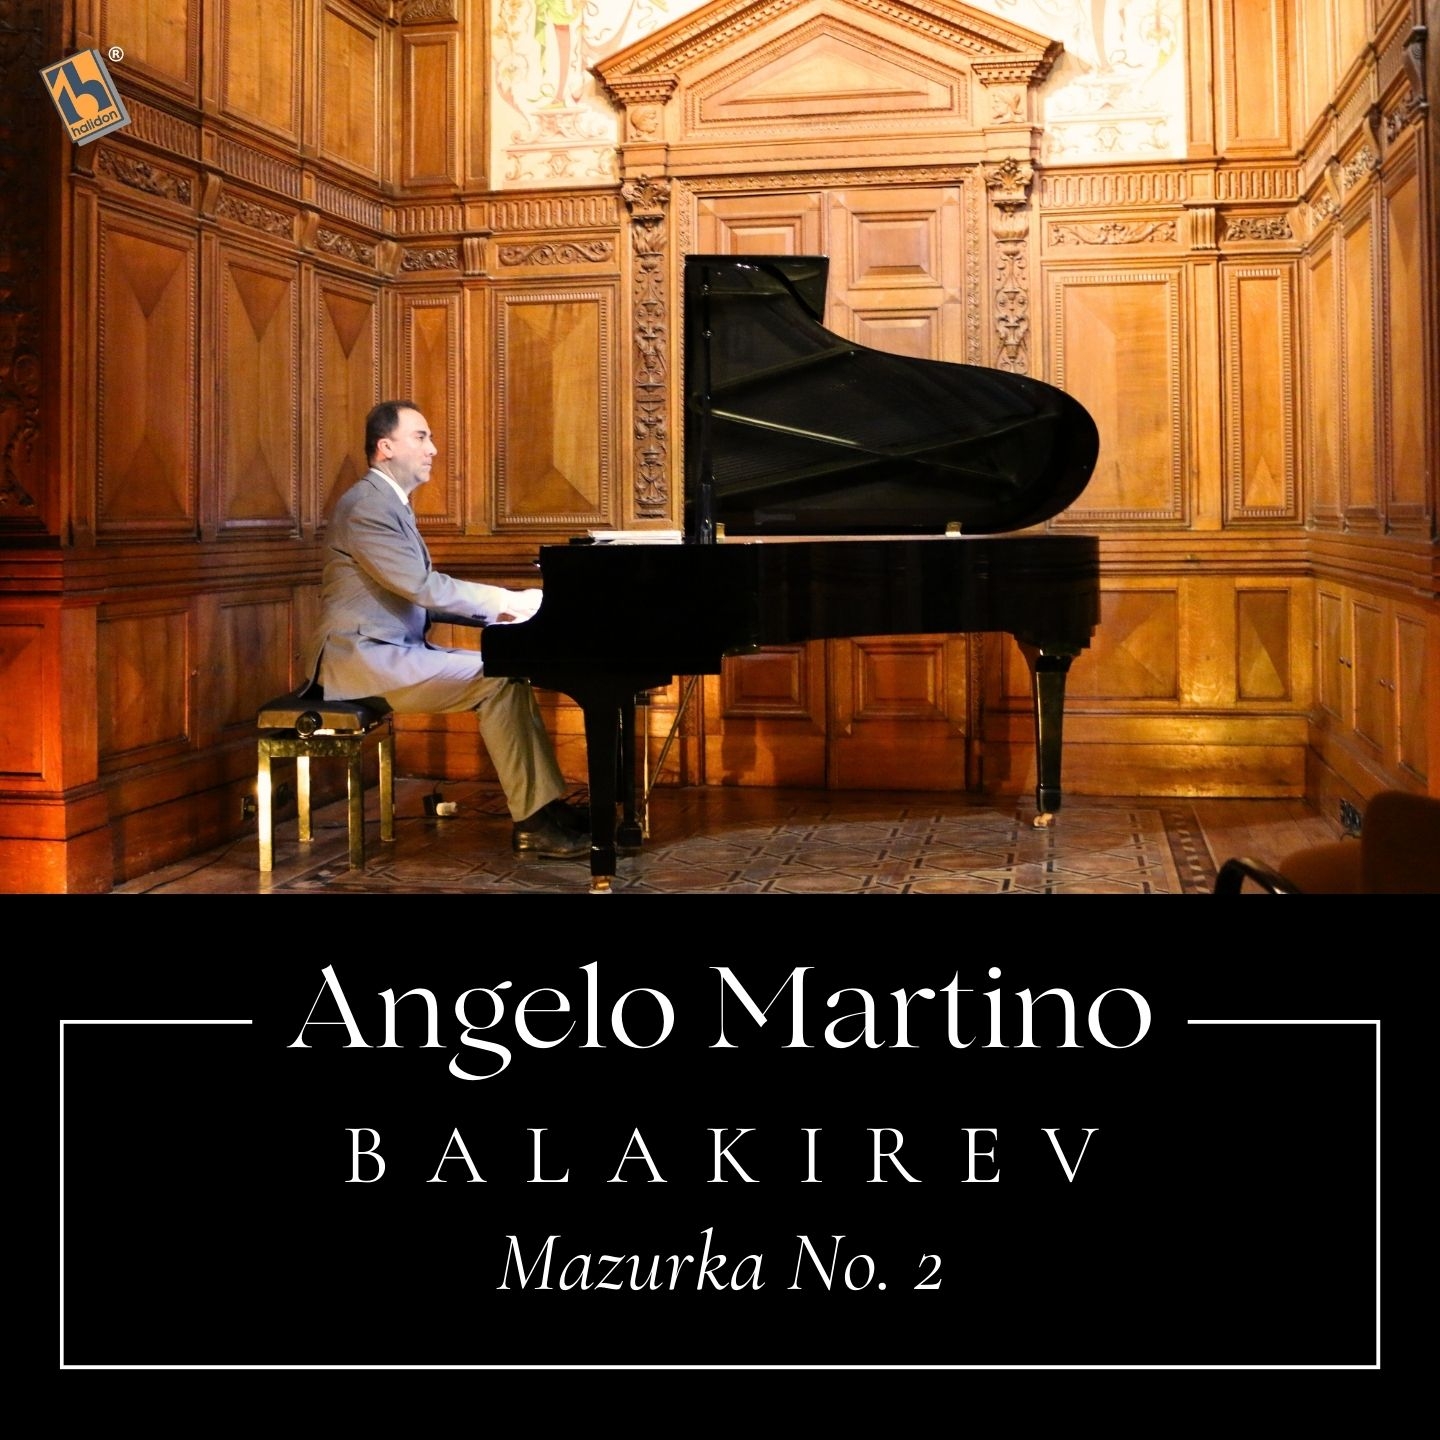 Balakirev: Mazurka No. 2 in C-Sharp Minor